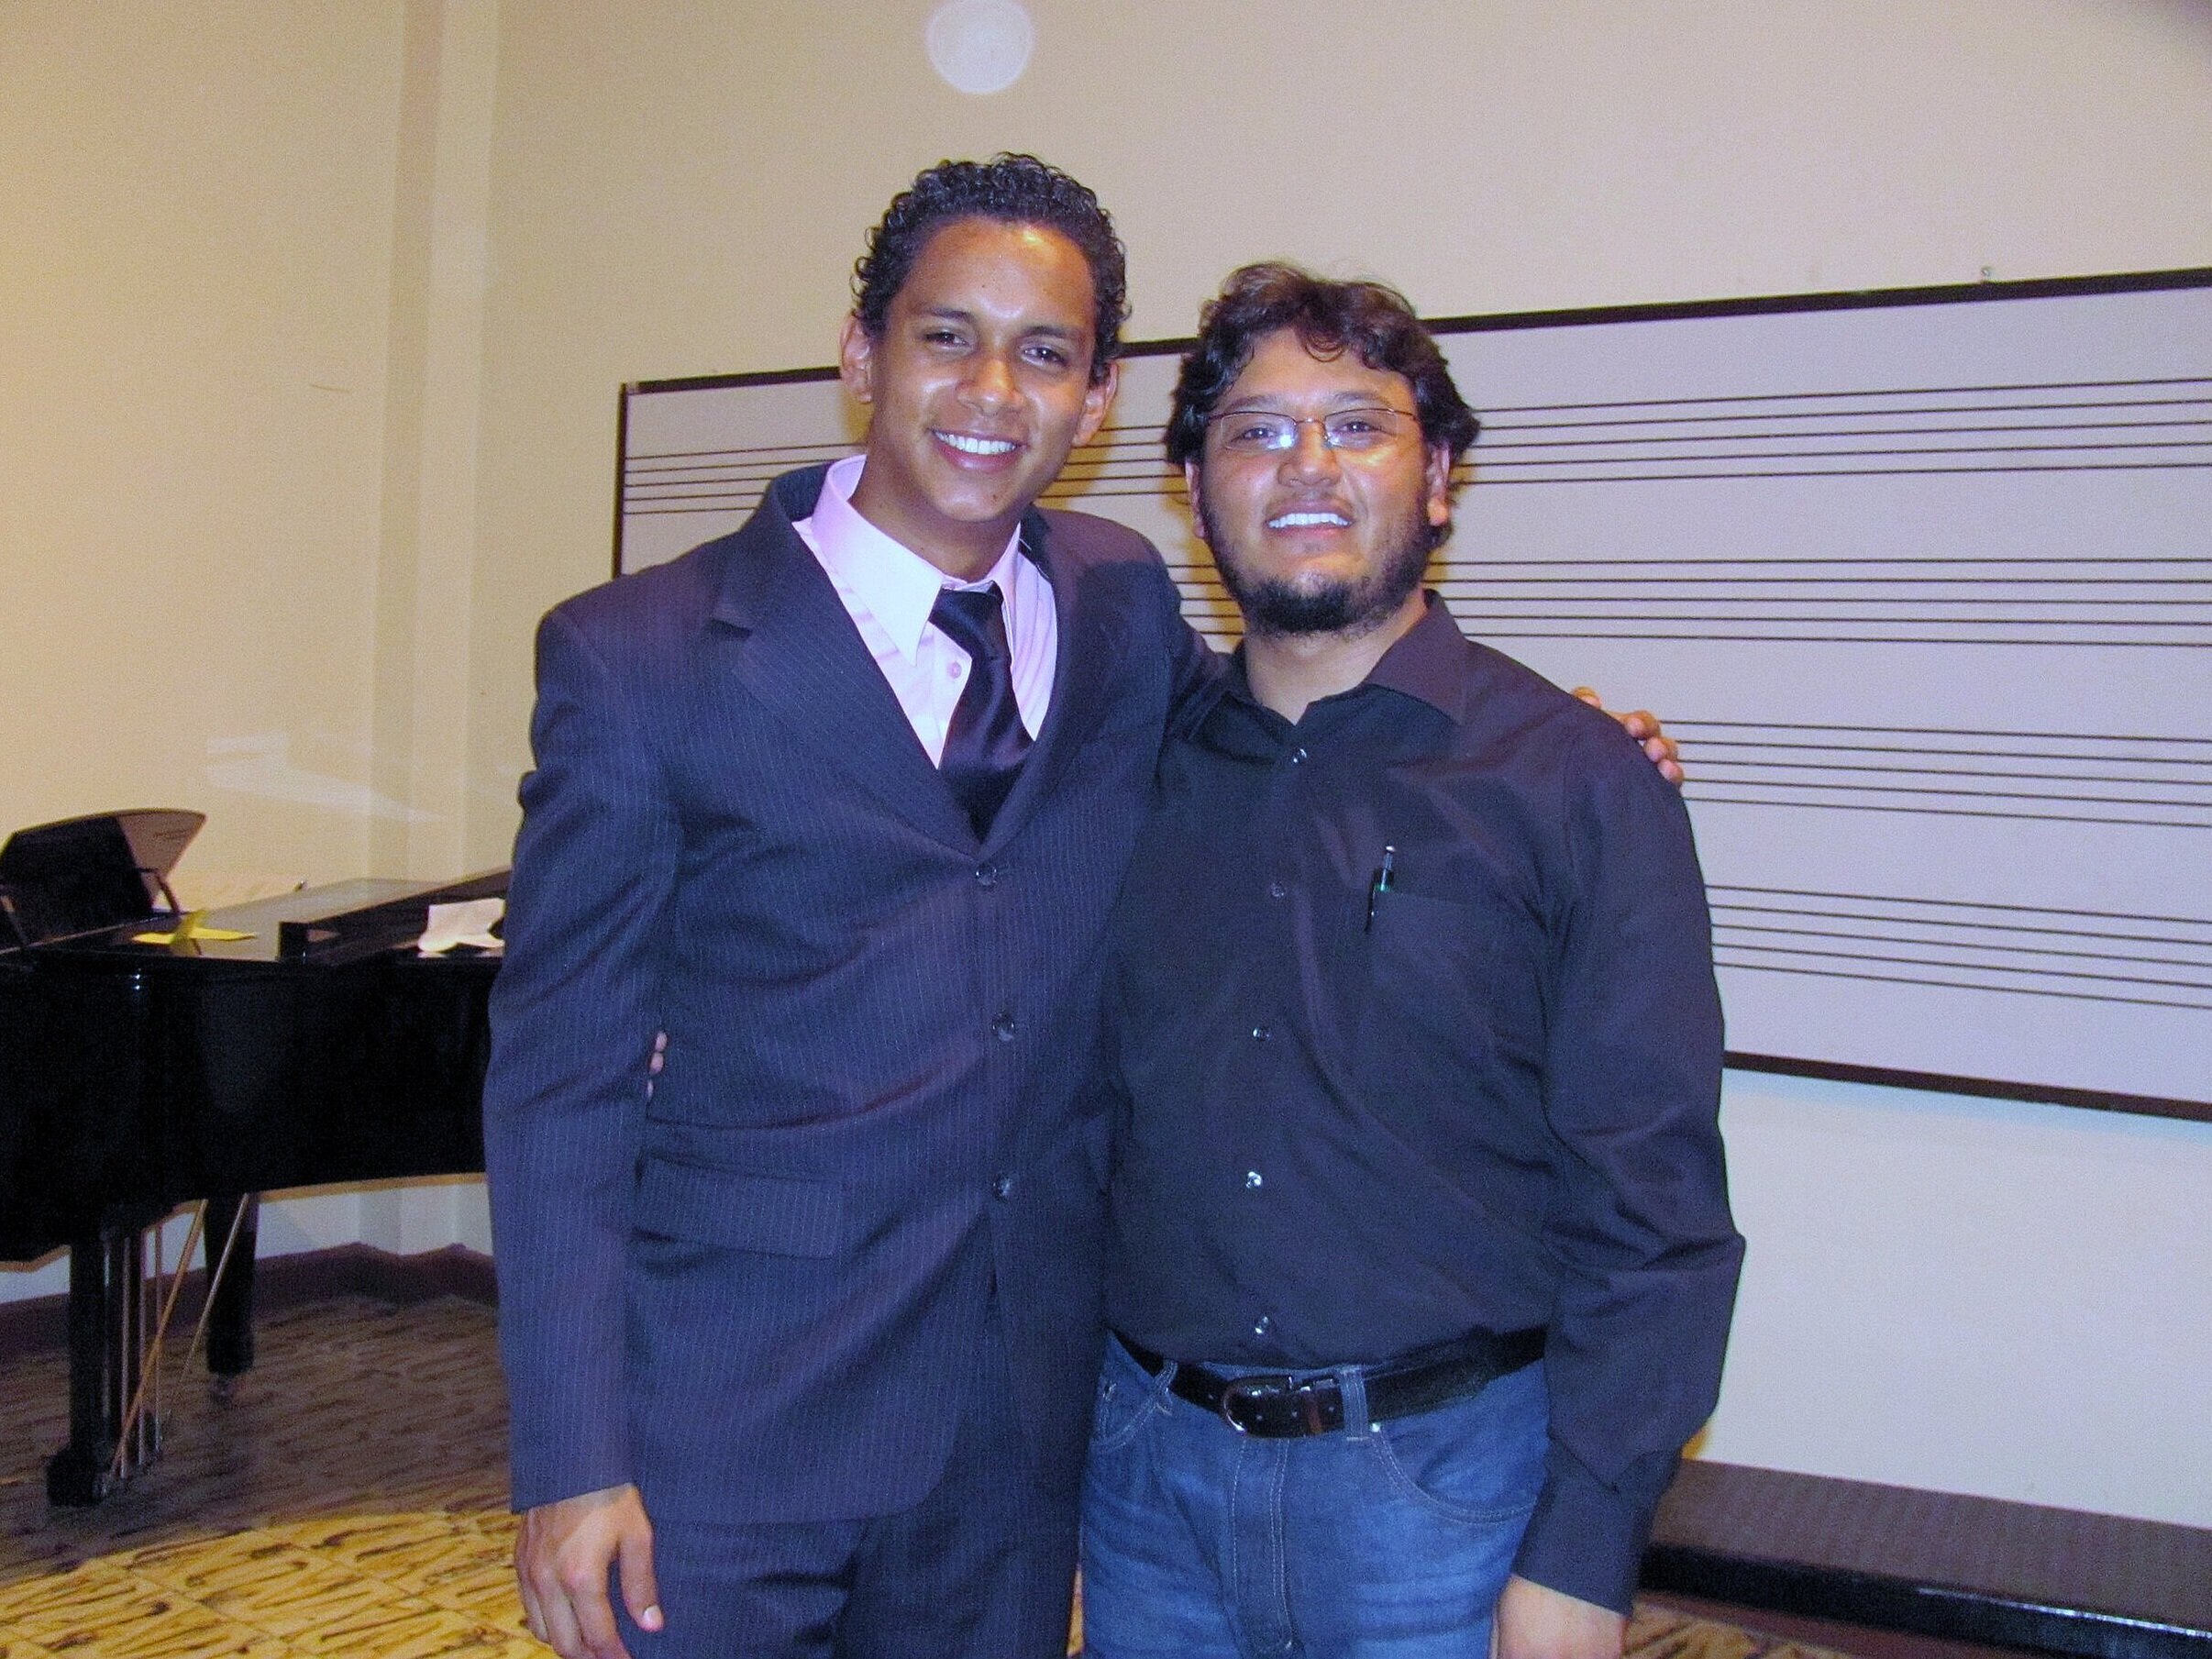 Carlos Sanchez, my first choral conducting teacher